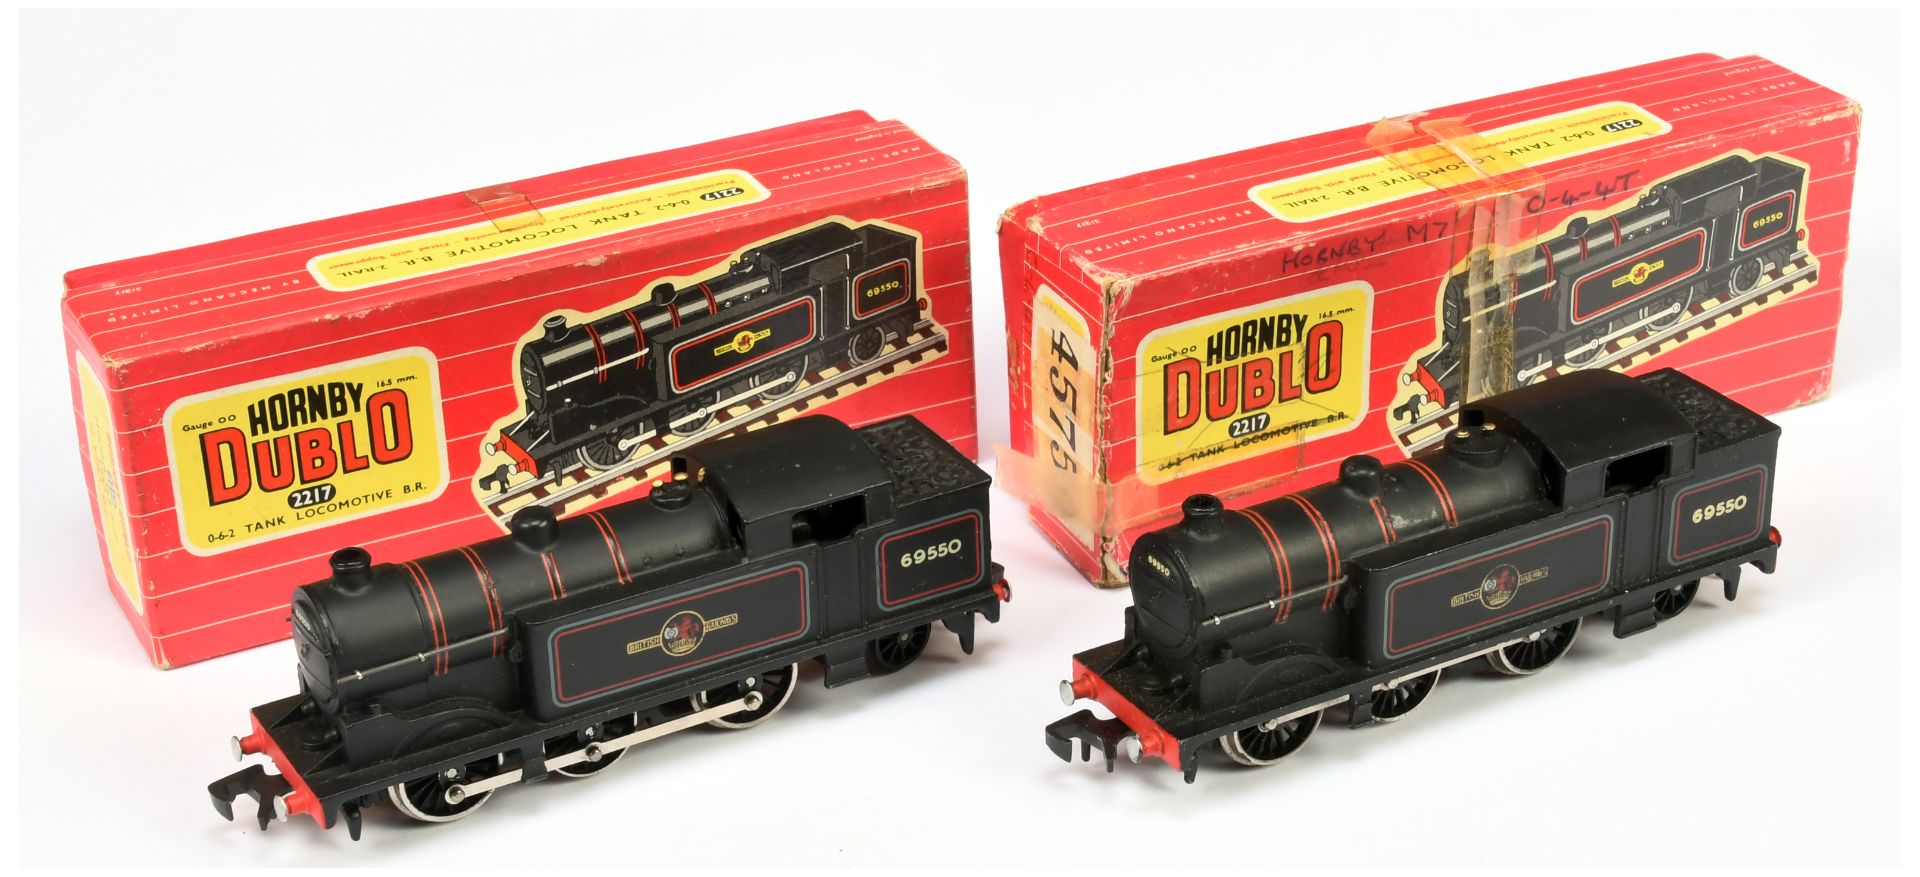 Hornby Dublo 2-rail pair of 2217 0-6-2 BR N2 Steam Tank Locomotives No. 69550